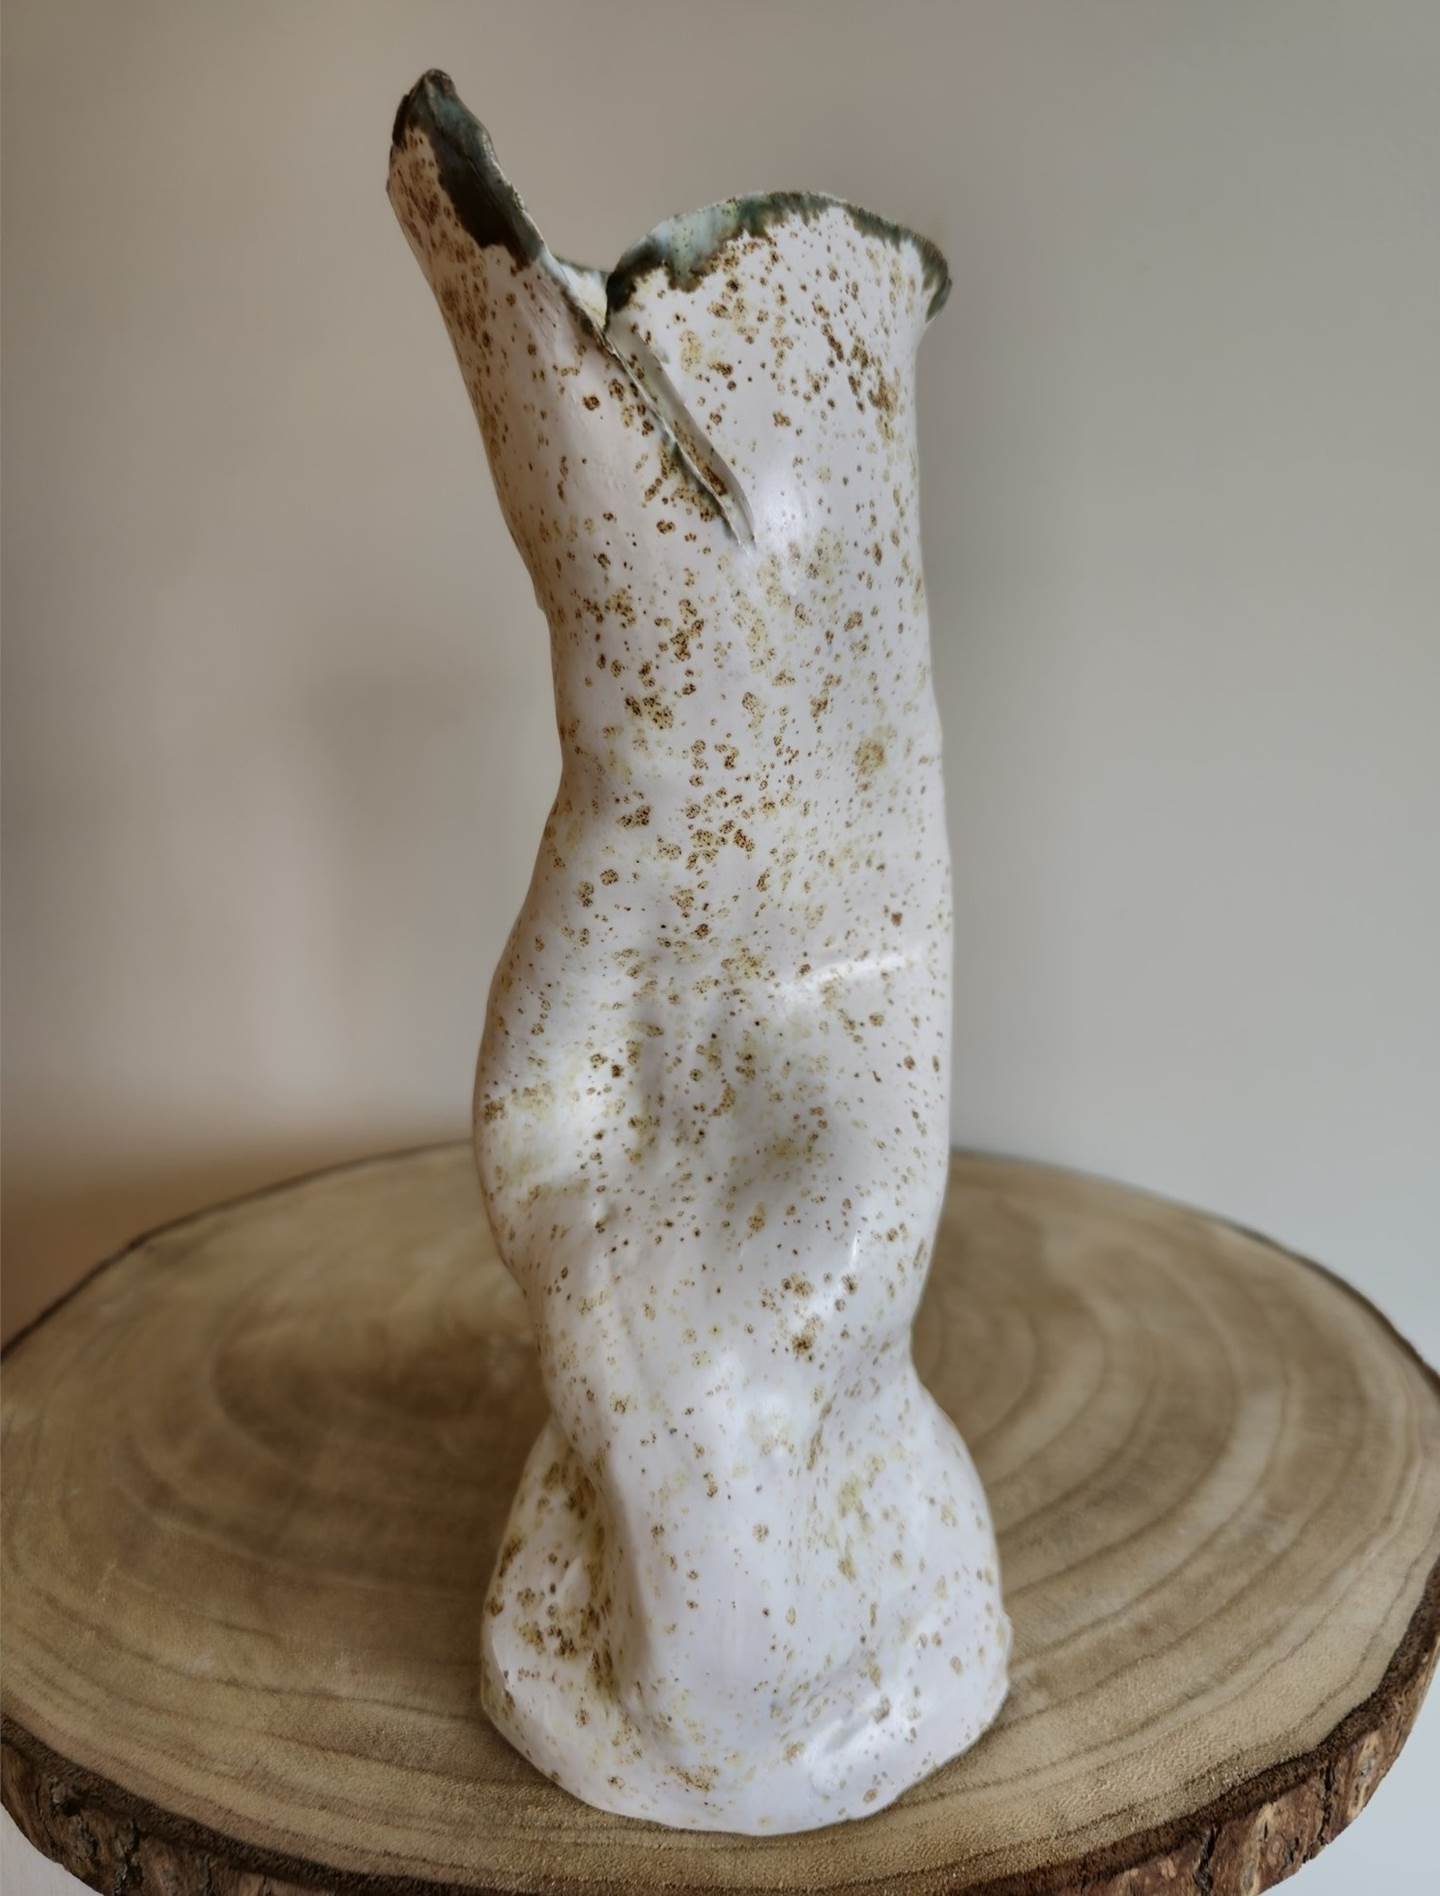 Vase III, original Figure humaine Céramique Sculpture par Ana Sousa Santos